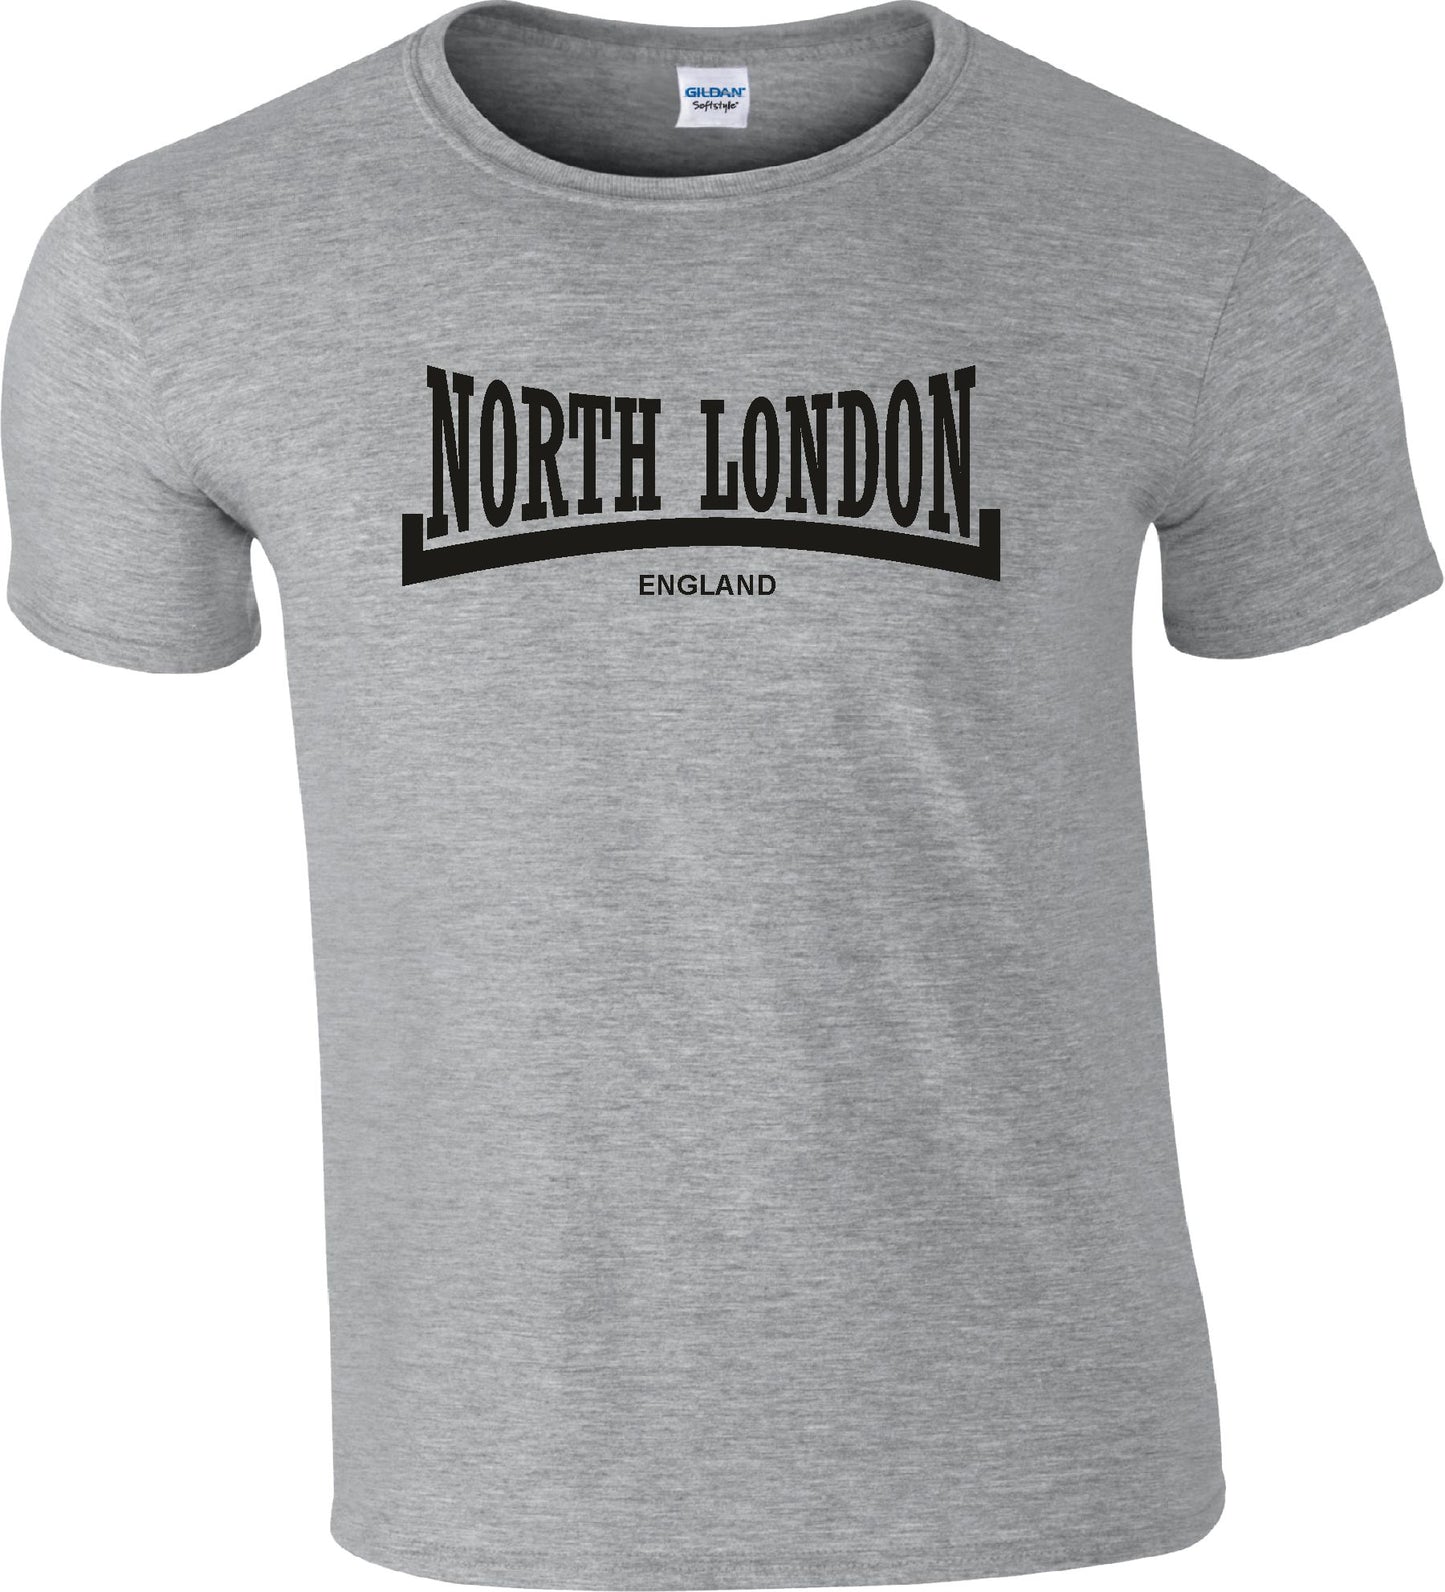 North London T-Shirt - London Souvenir, Custom Print Available, Various Colours